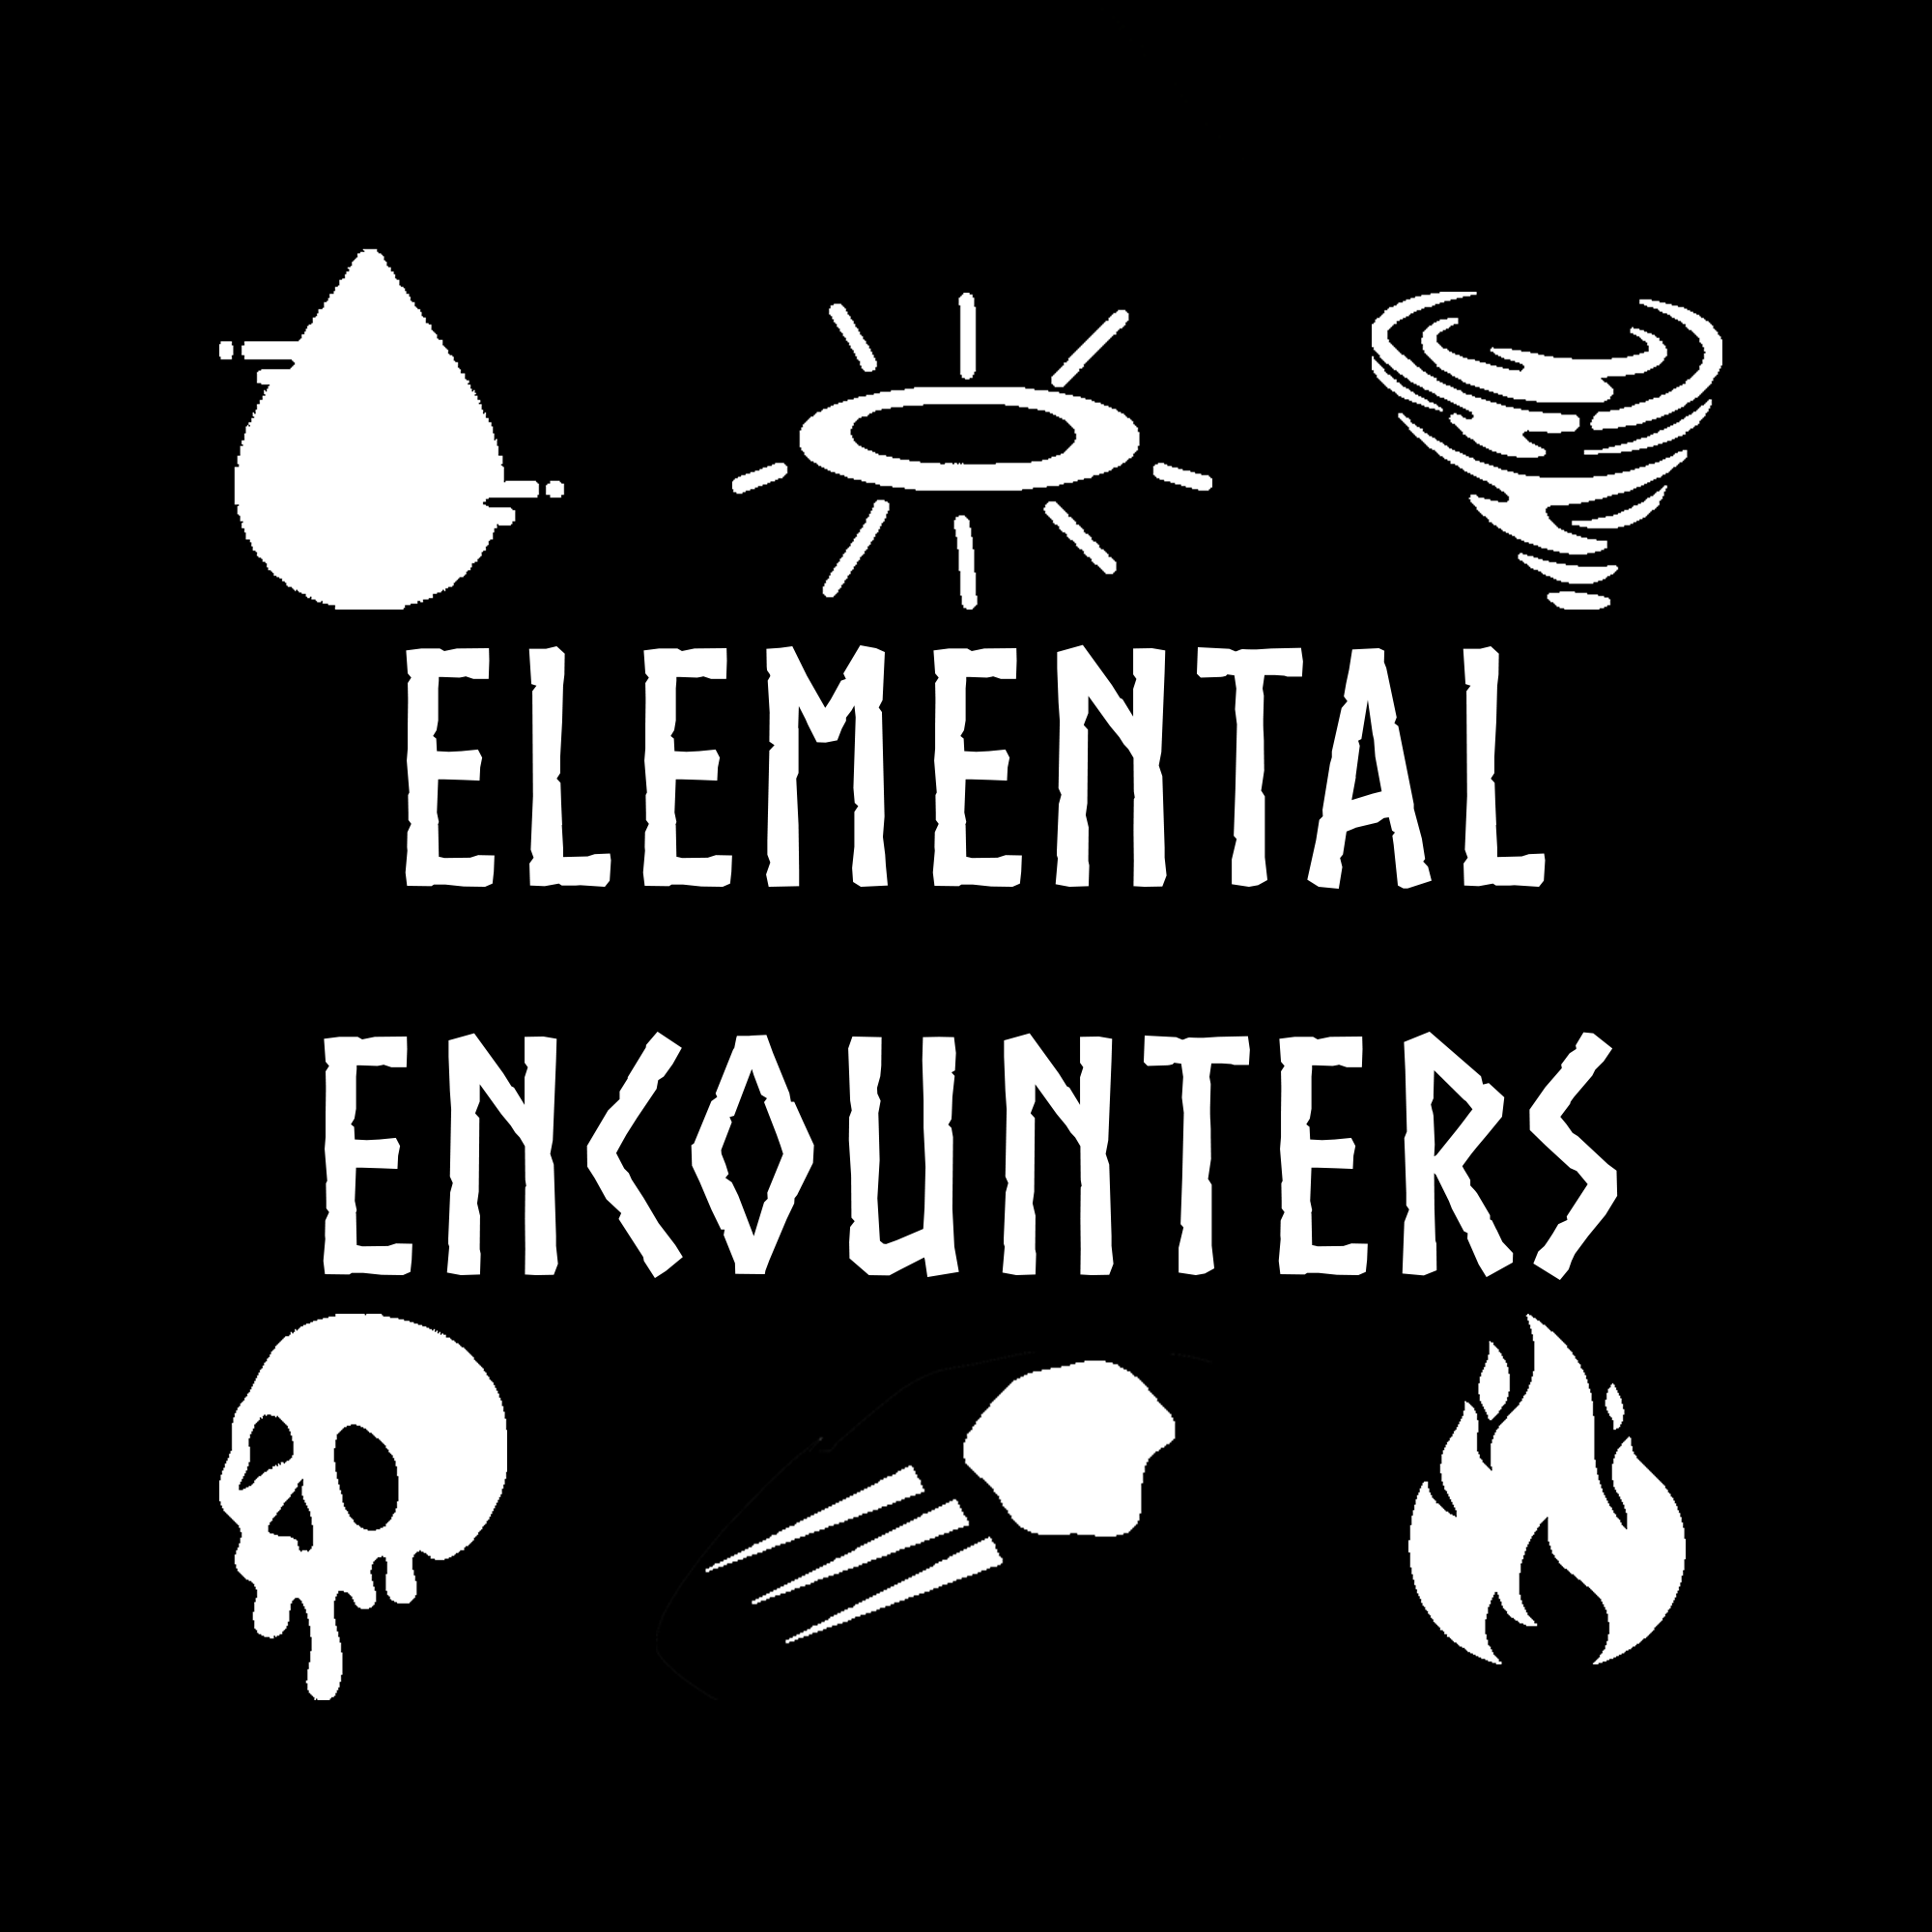 Elemental Encounters